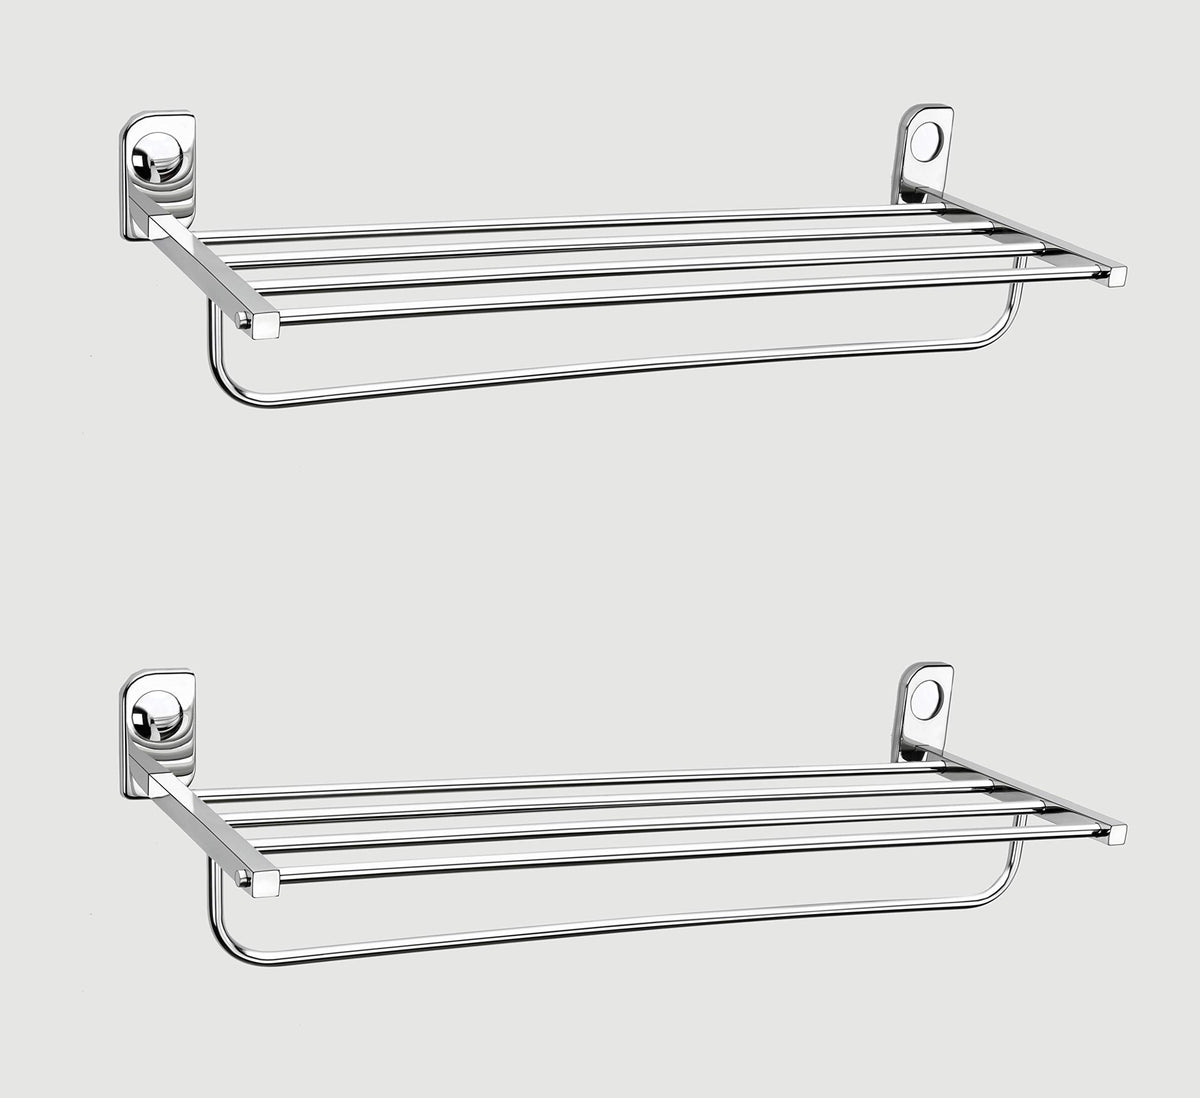 Plantex Dream Stainless Steel Towel Rack for Bathroom/Towel Stand/Towel Hanger/Bathroom Accessories (24 Inch-Chrome) - Pack of 2